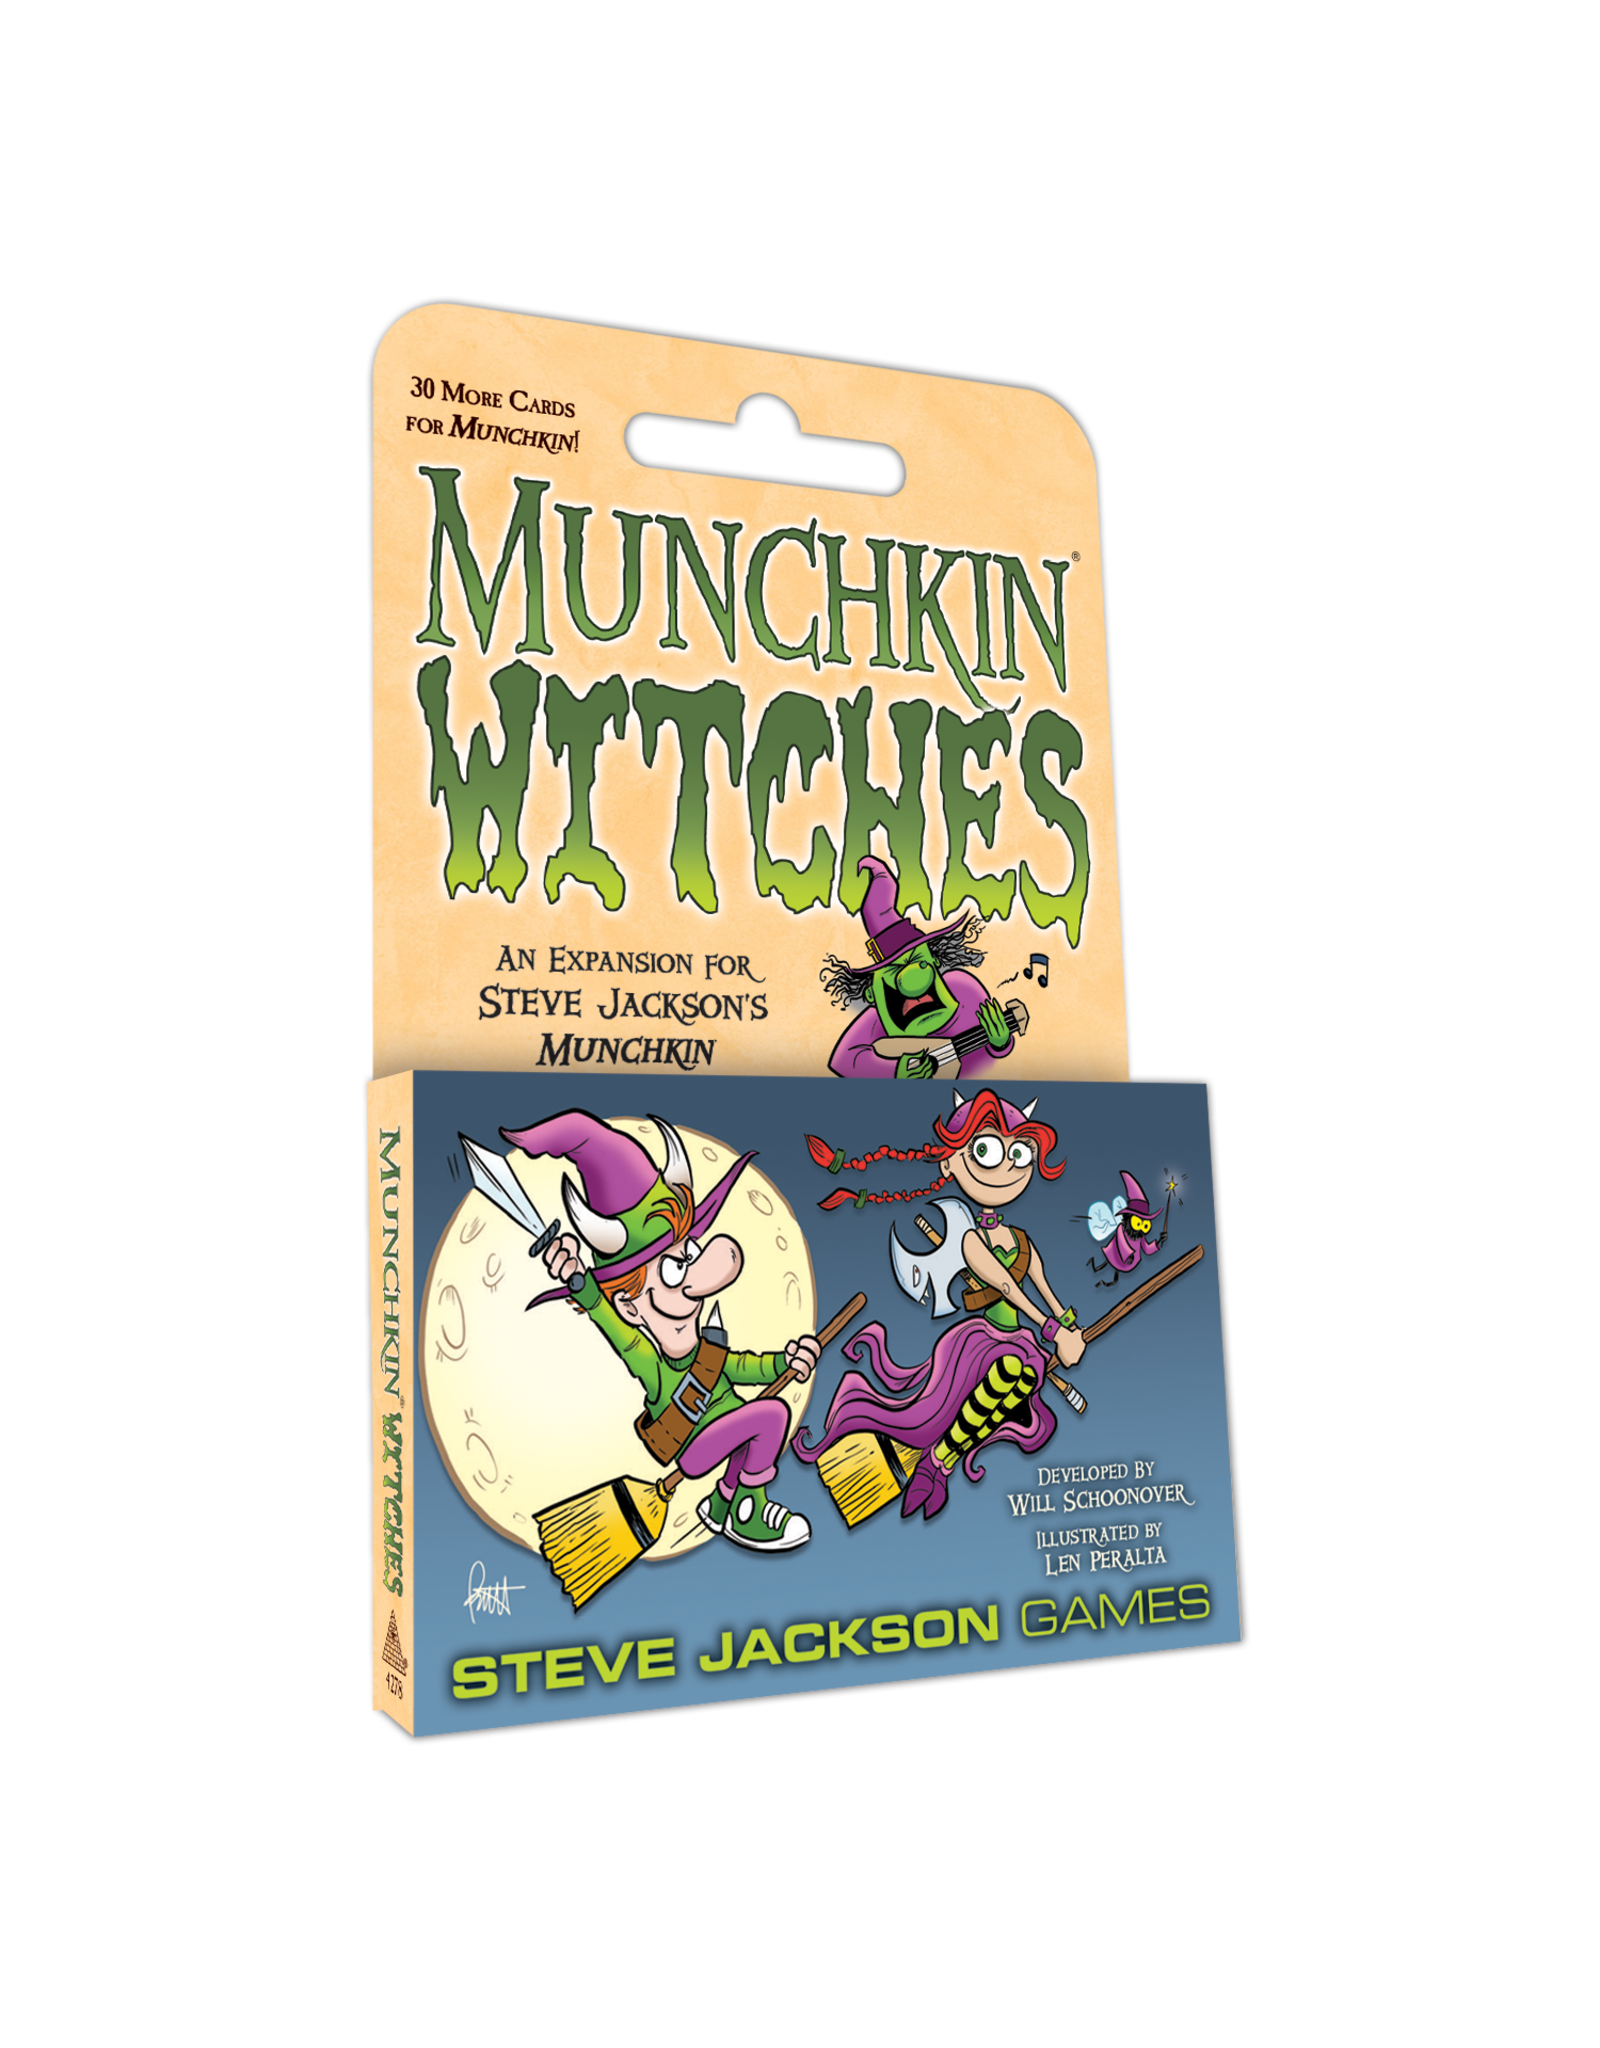 Munchkin Witches